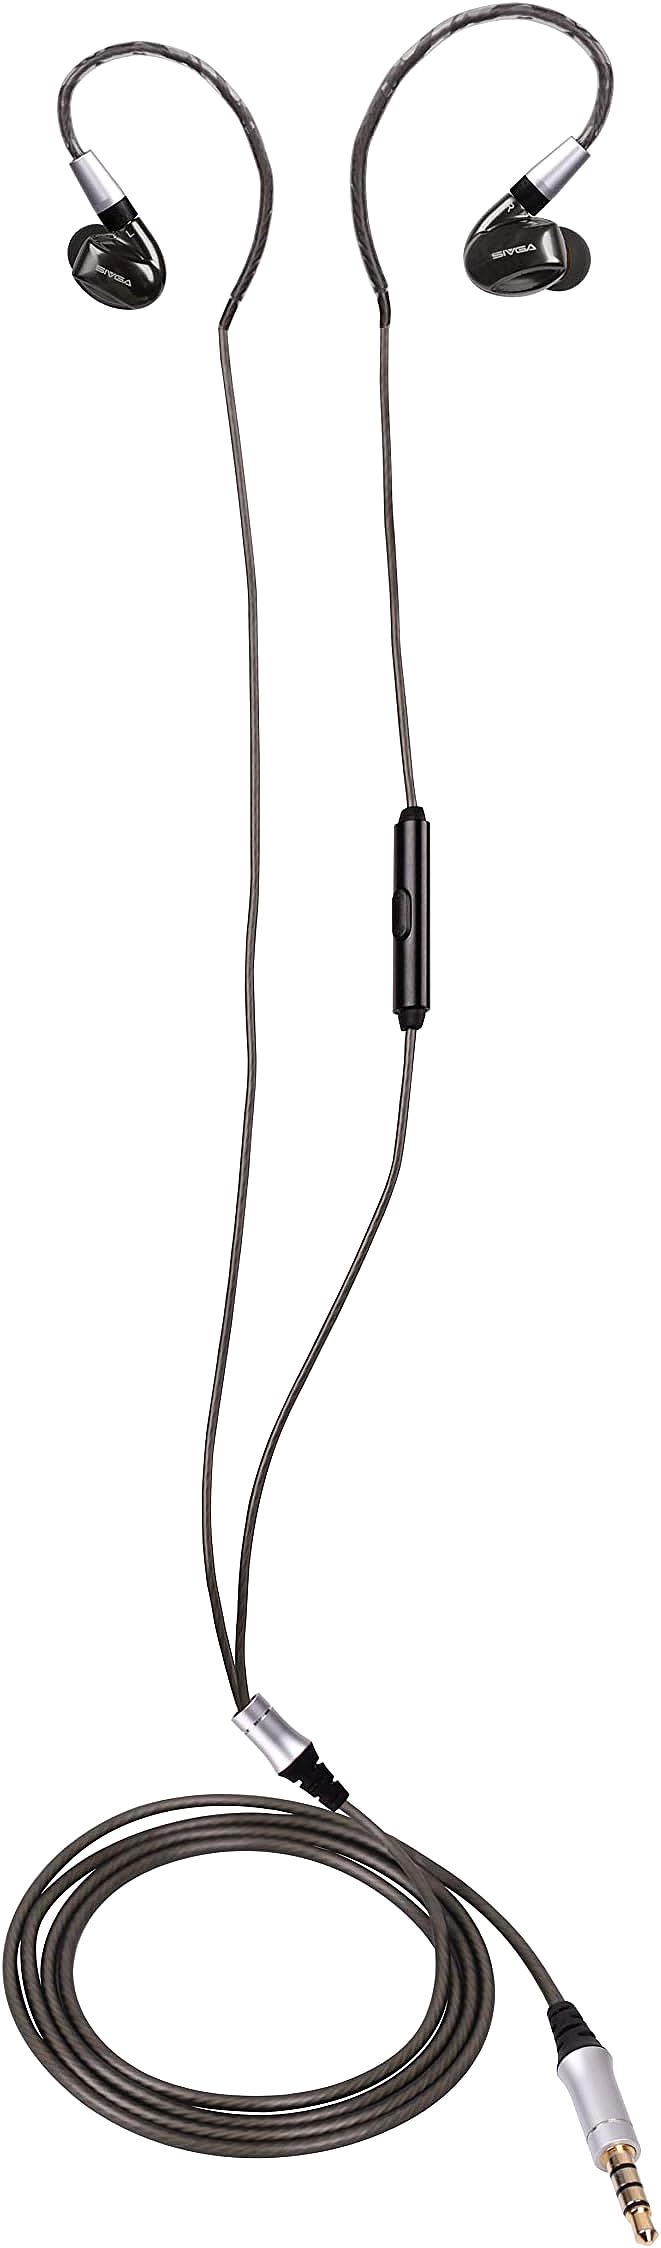  SIVGA SM003 Professional High-definition Sport In-Ear Earphones   